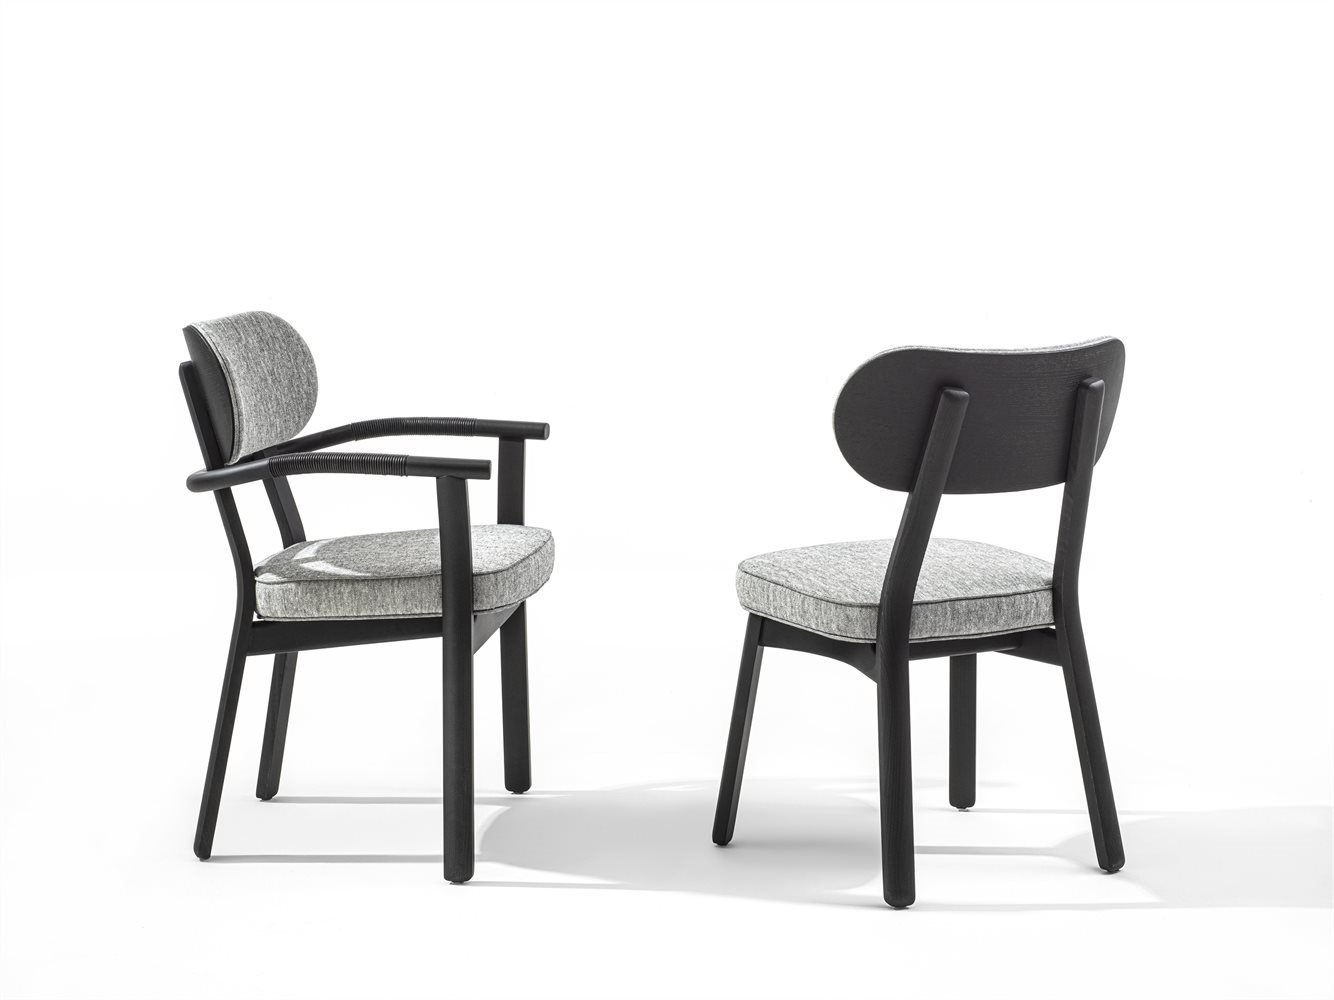 Evelin Chair from Porada, designed by C. Ballabio